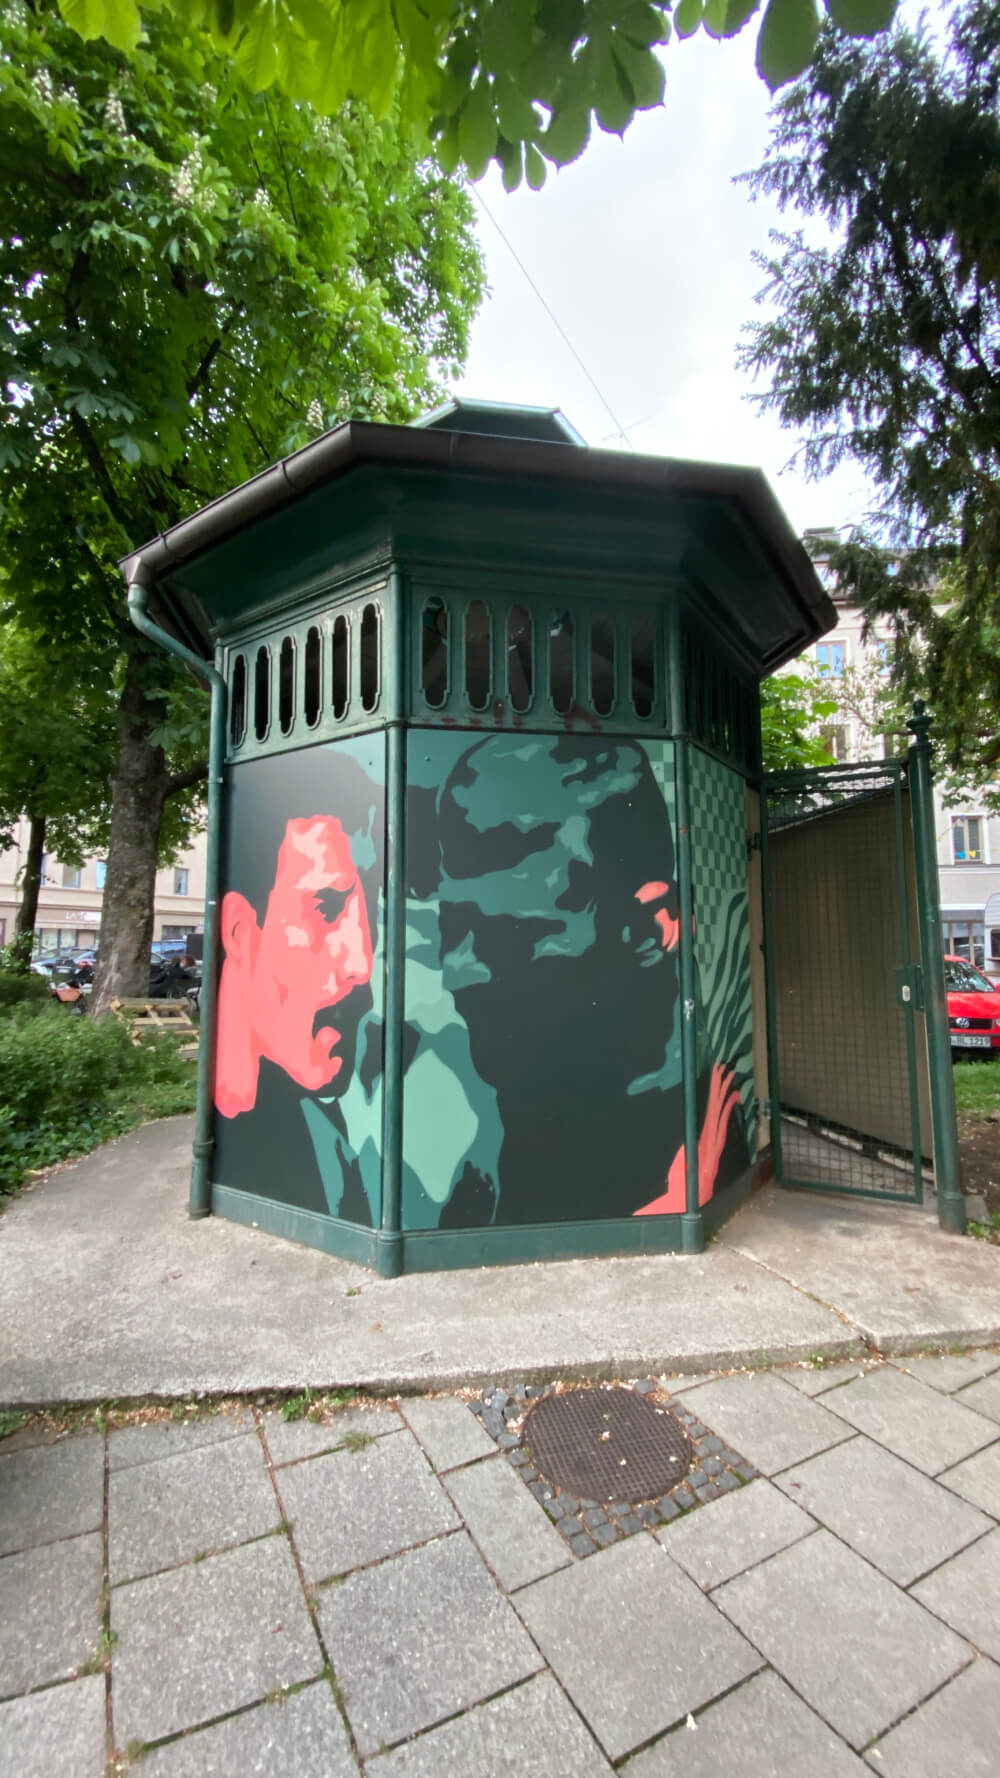 The Freddie Mercury Pissoir In Munich: A Hidden Toilet Tribute